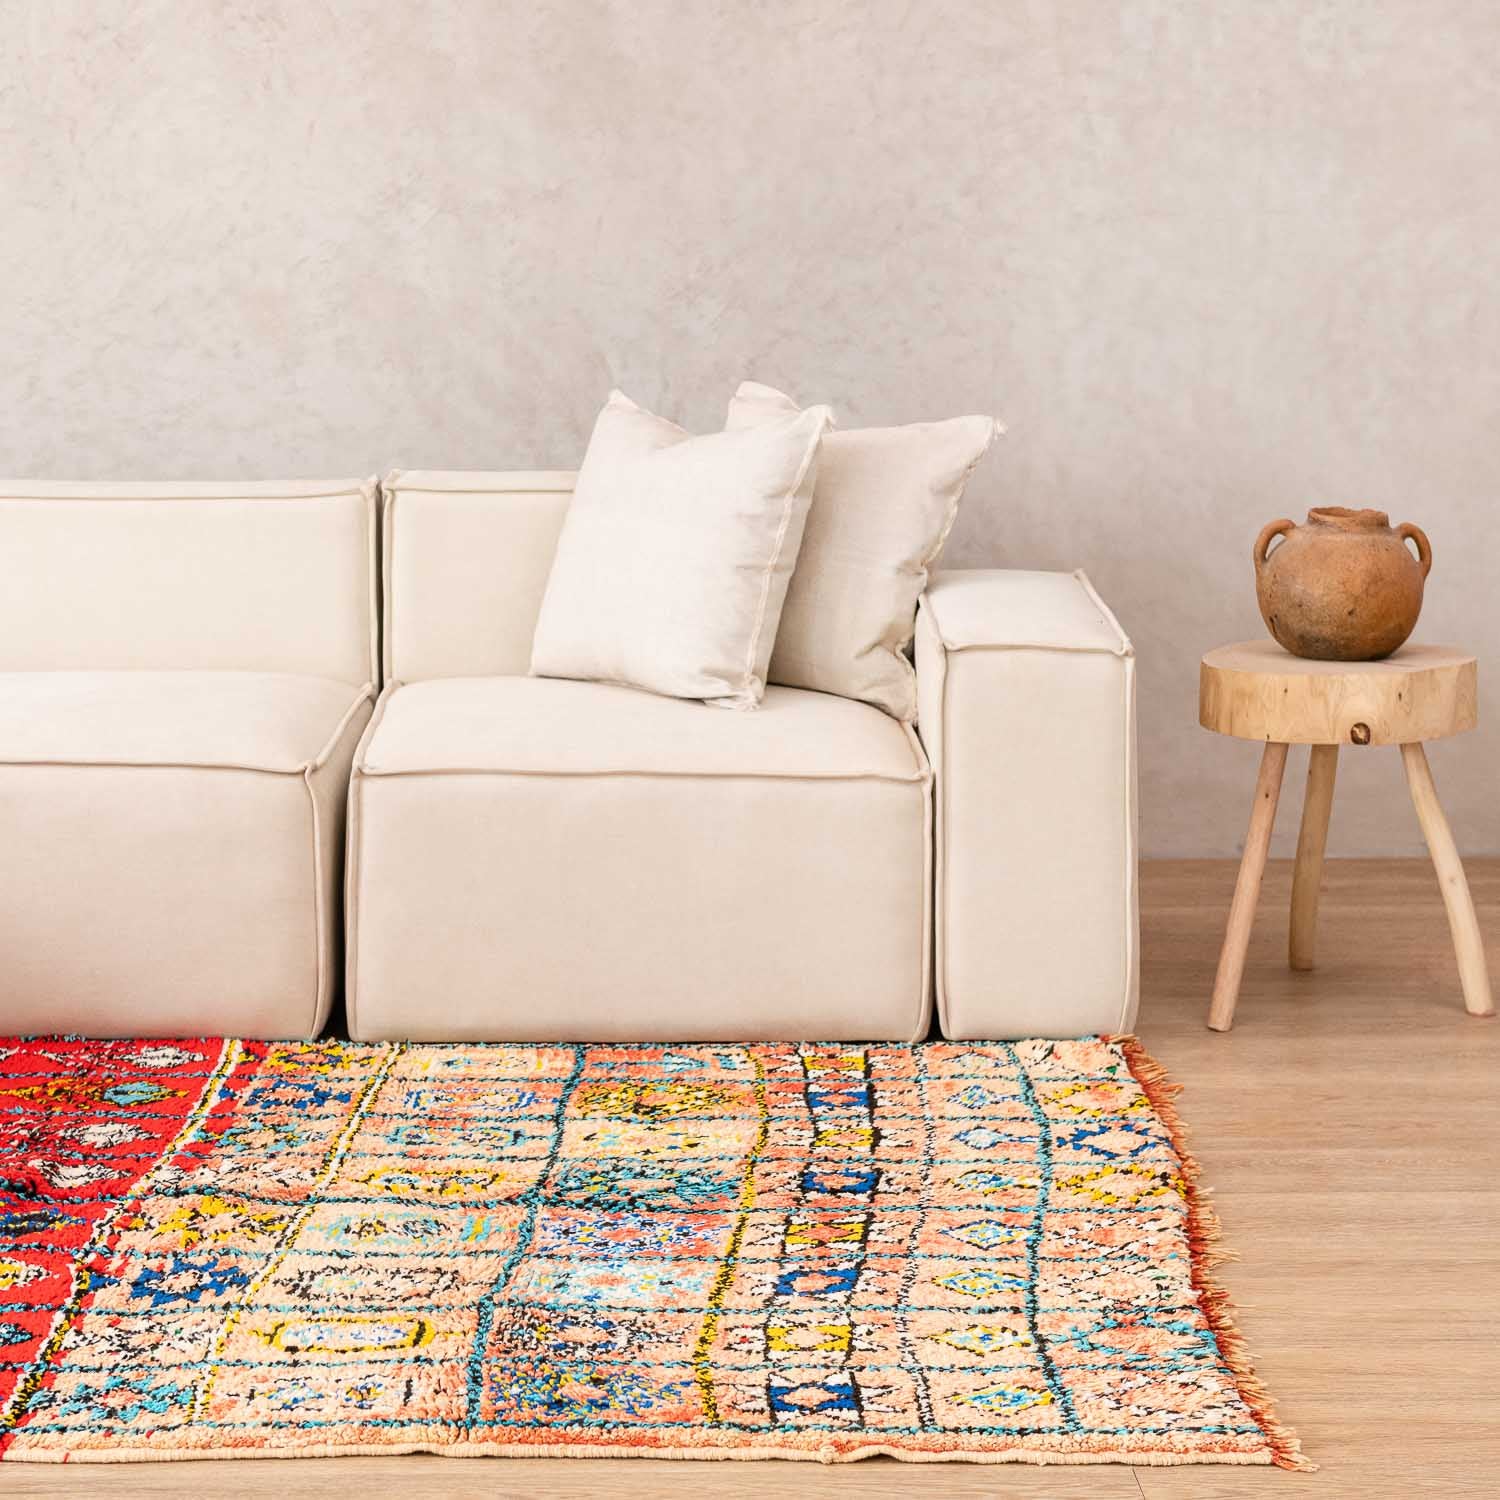 Khezia - Vintage Moroccan rug